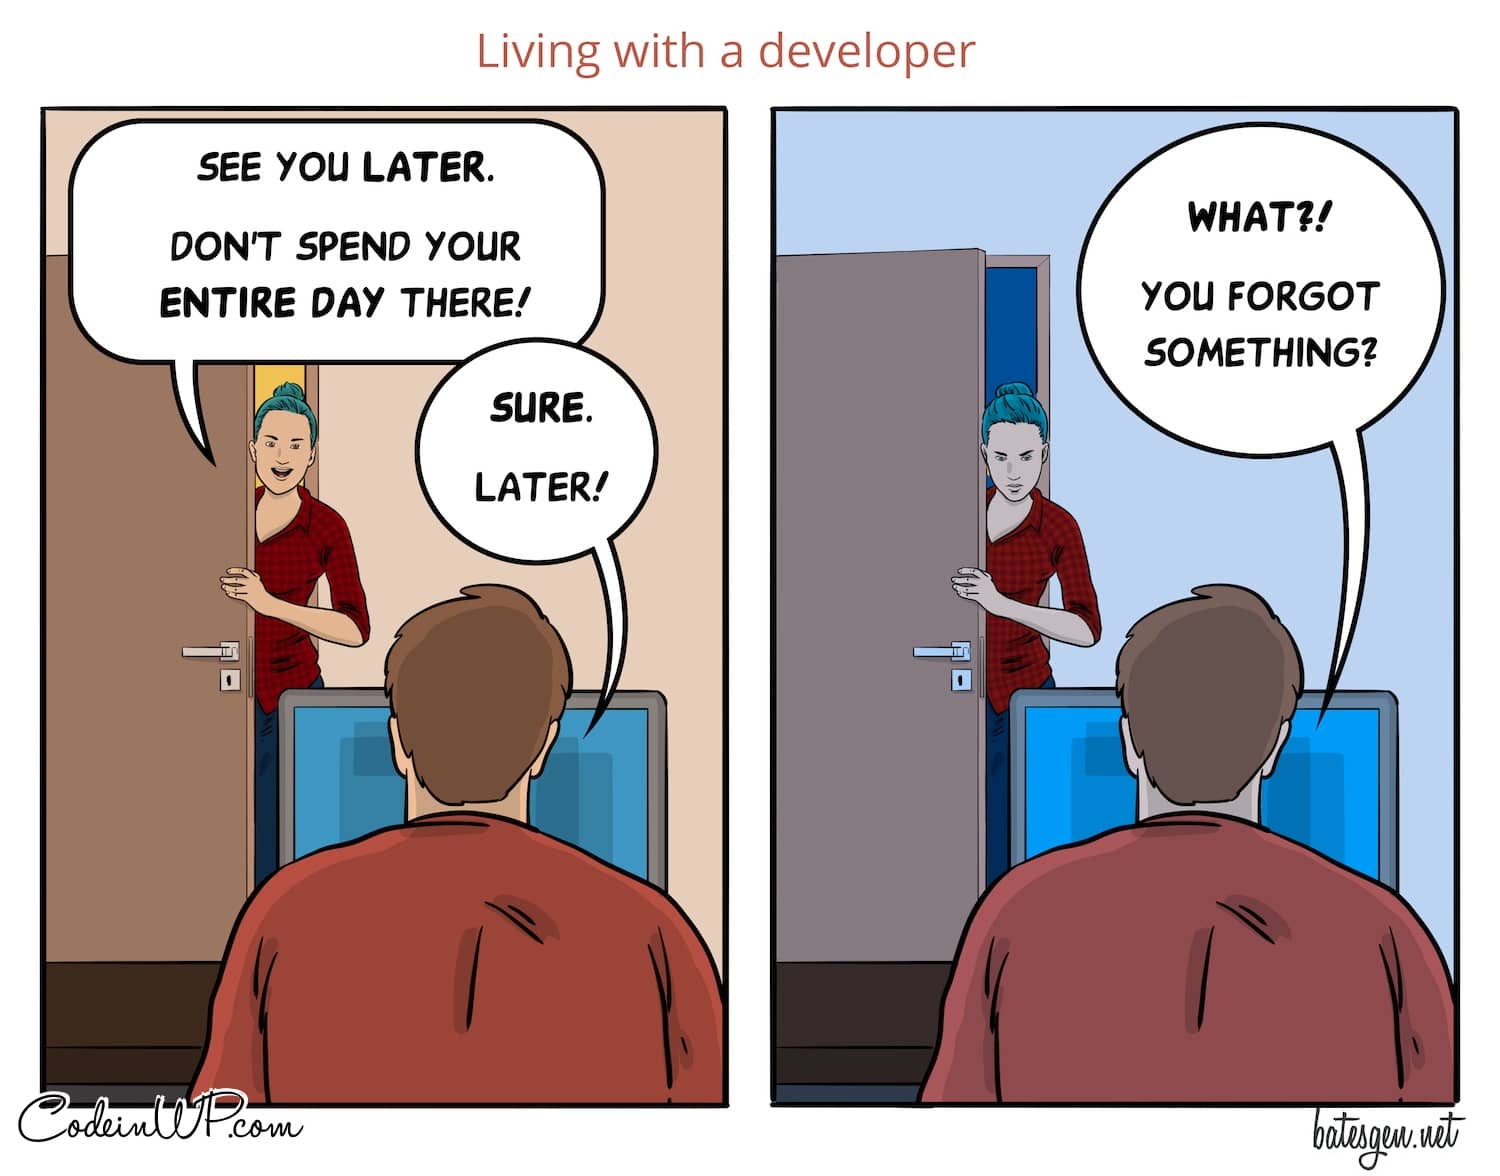 Web developer or timelord? You decide